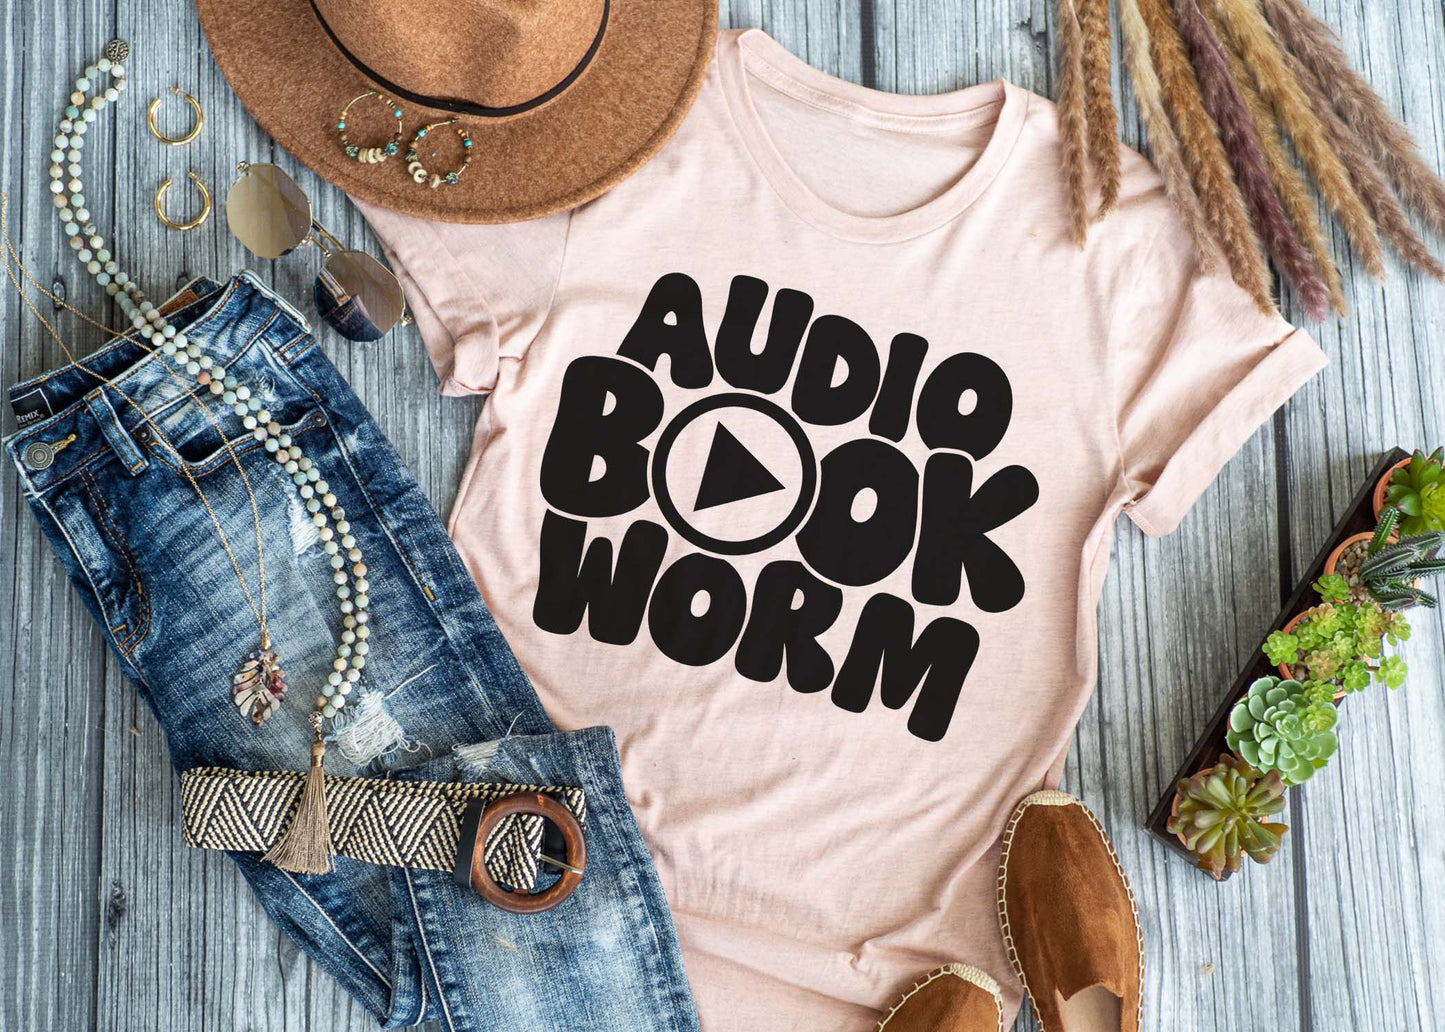 Audio book worm tee